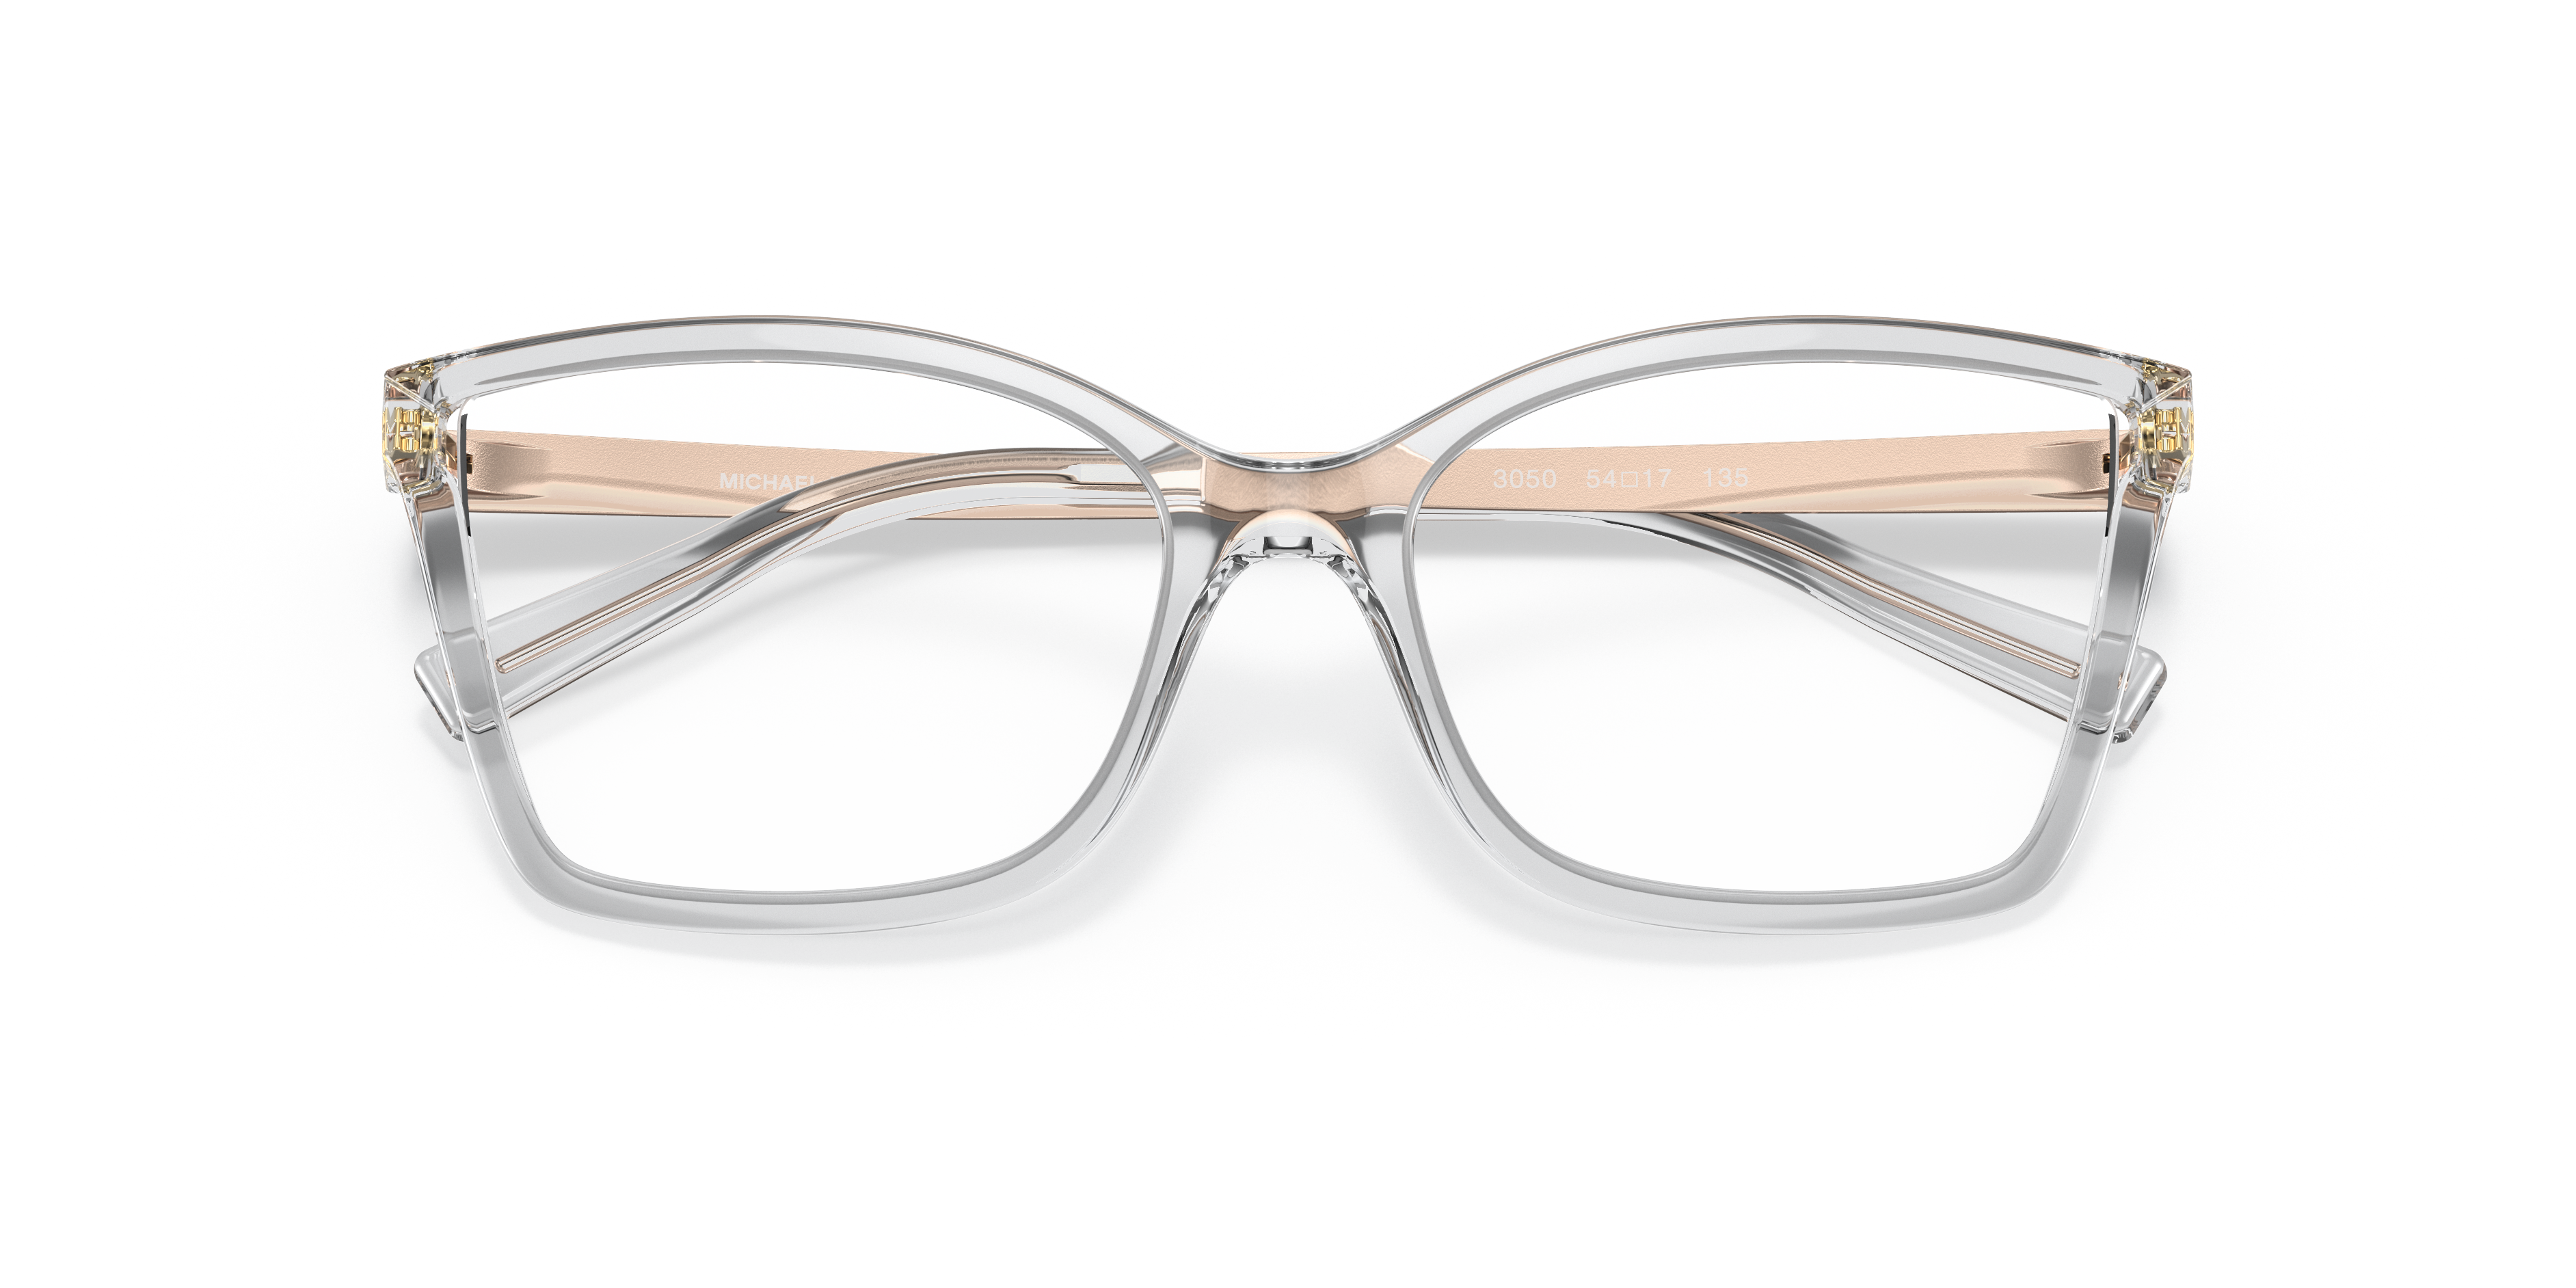 Michael Kors Clear Eyeglasses  Glassescom  Free Shipping